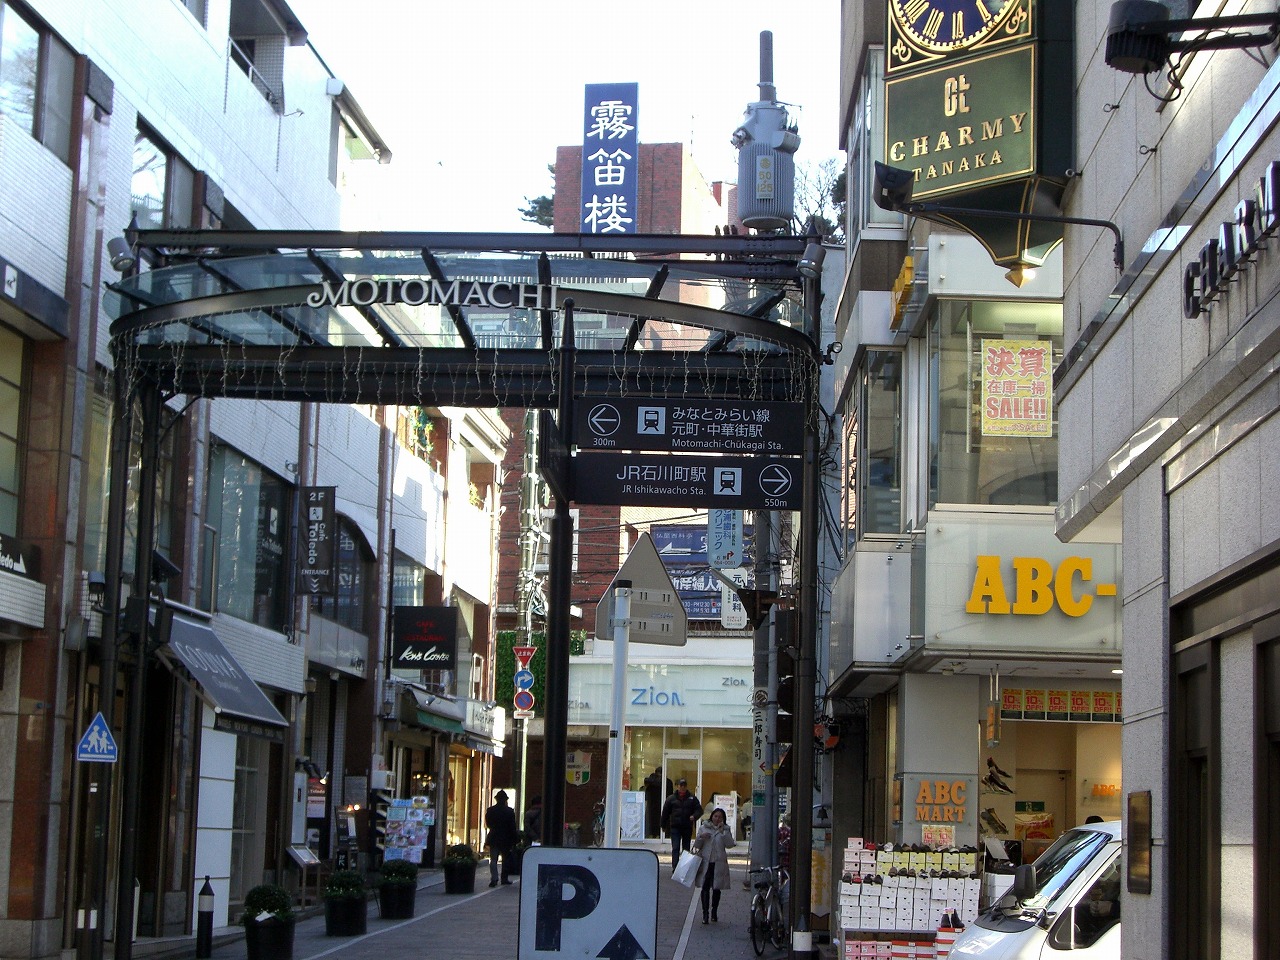 Motomachi